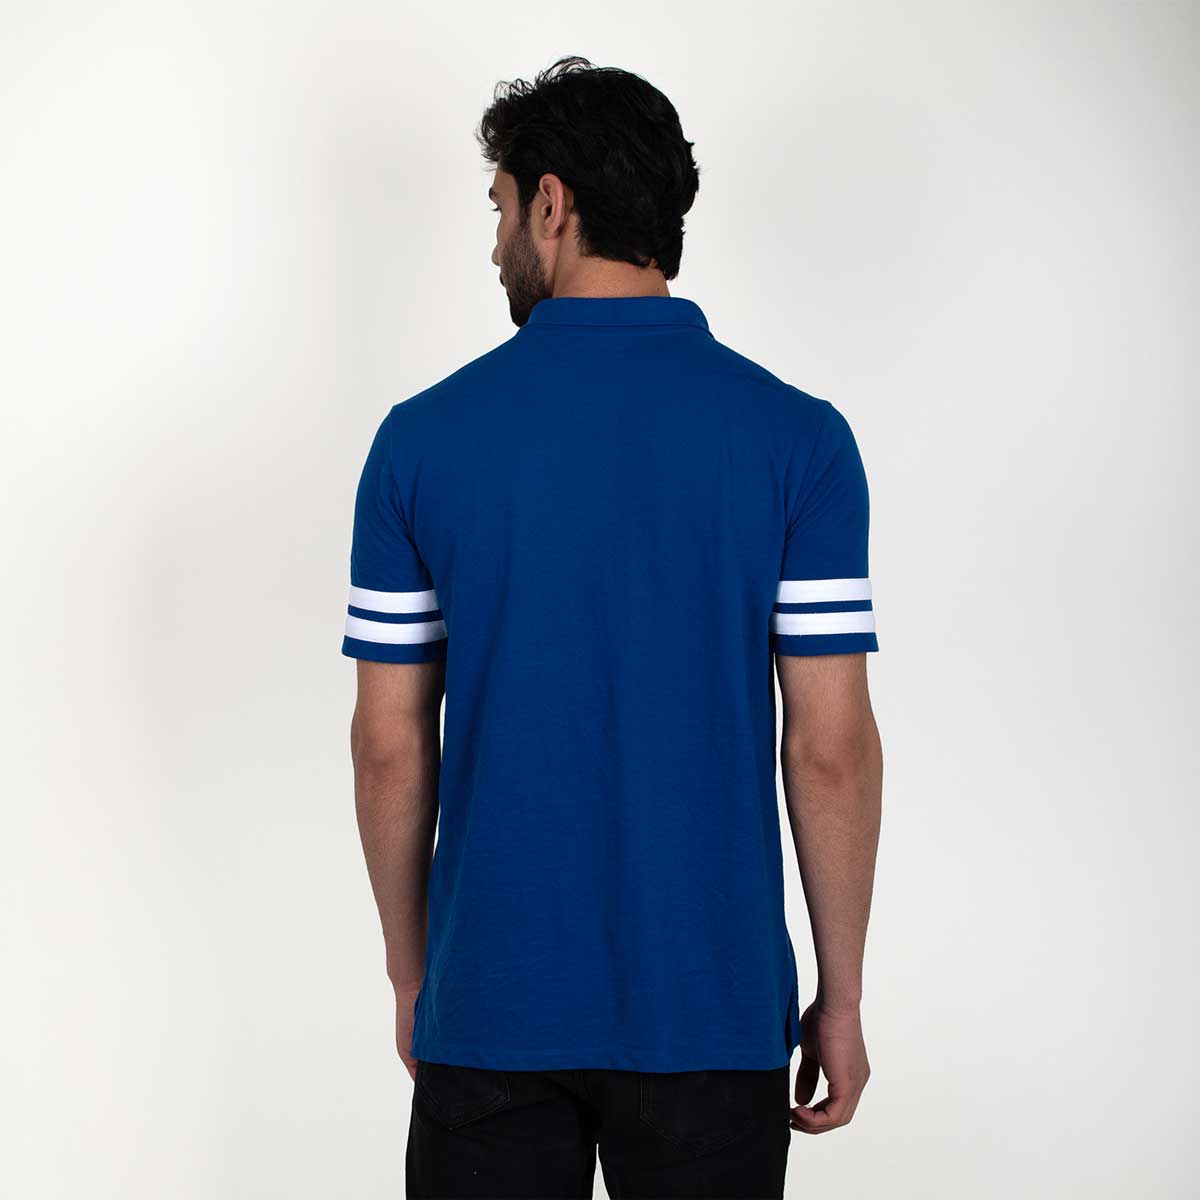 Real Kashmir Blue Polo T-shirt